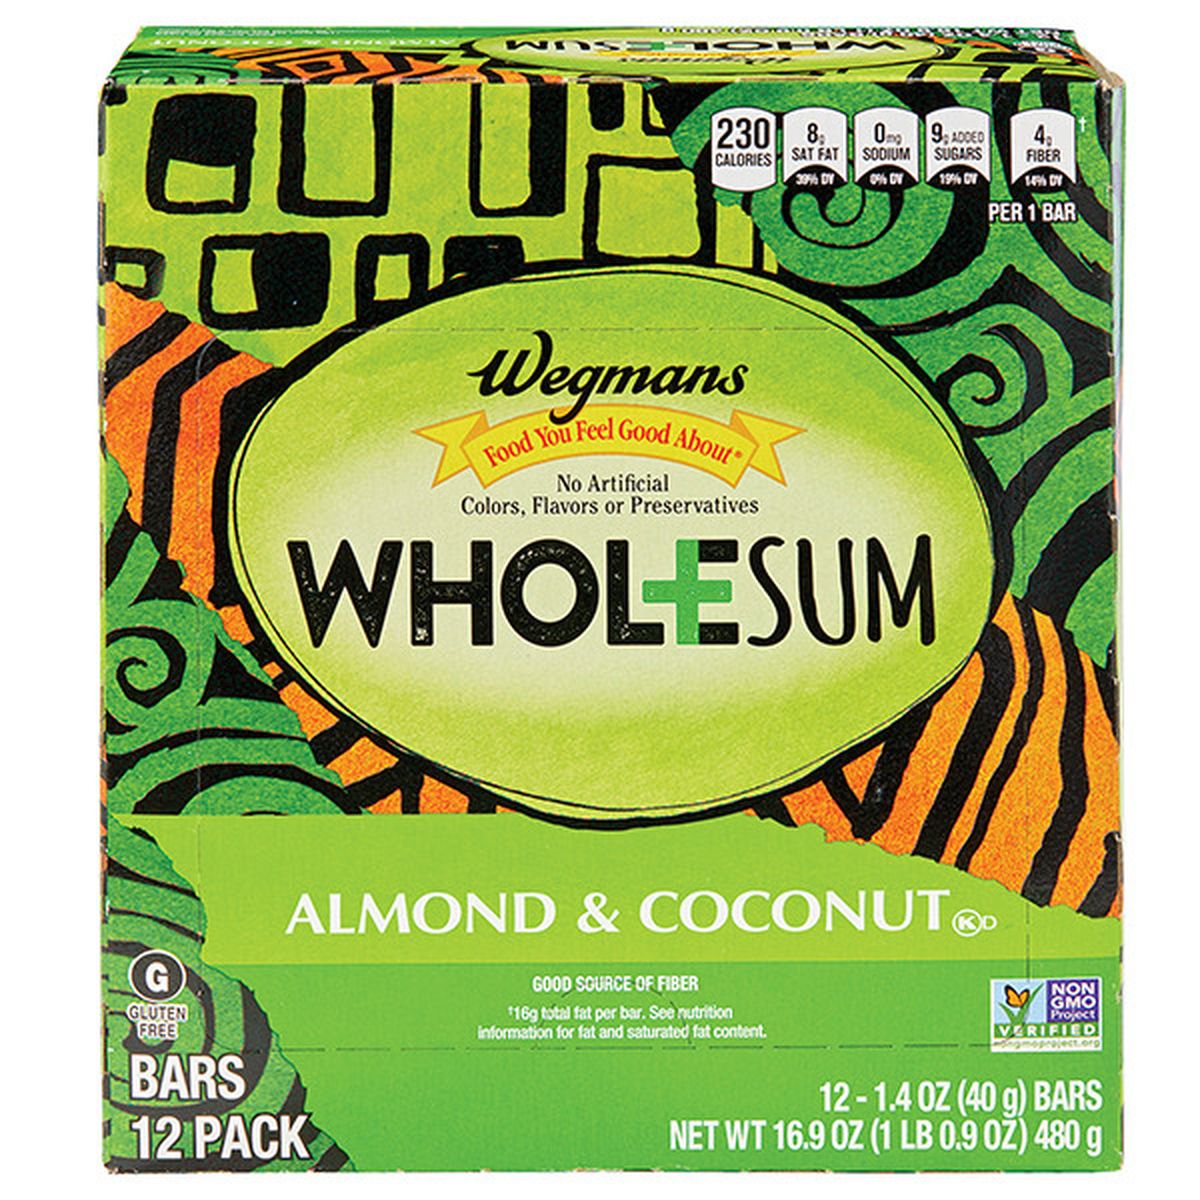 Calories in Wegmans Almond & Coconut Wholesum Bar 12ct box